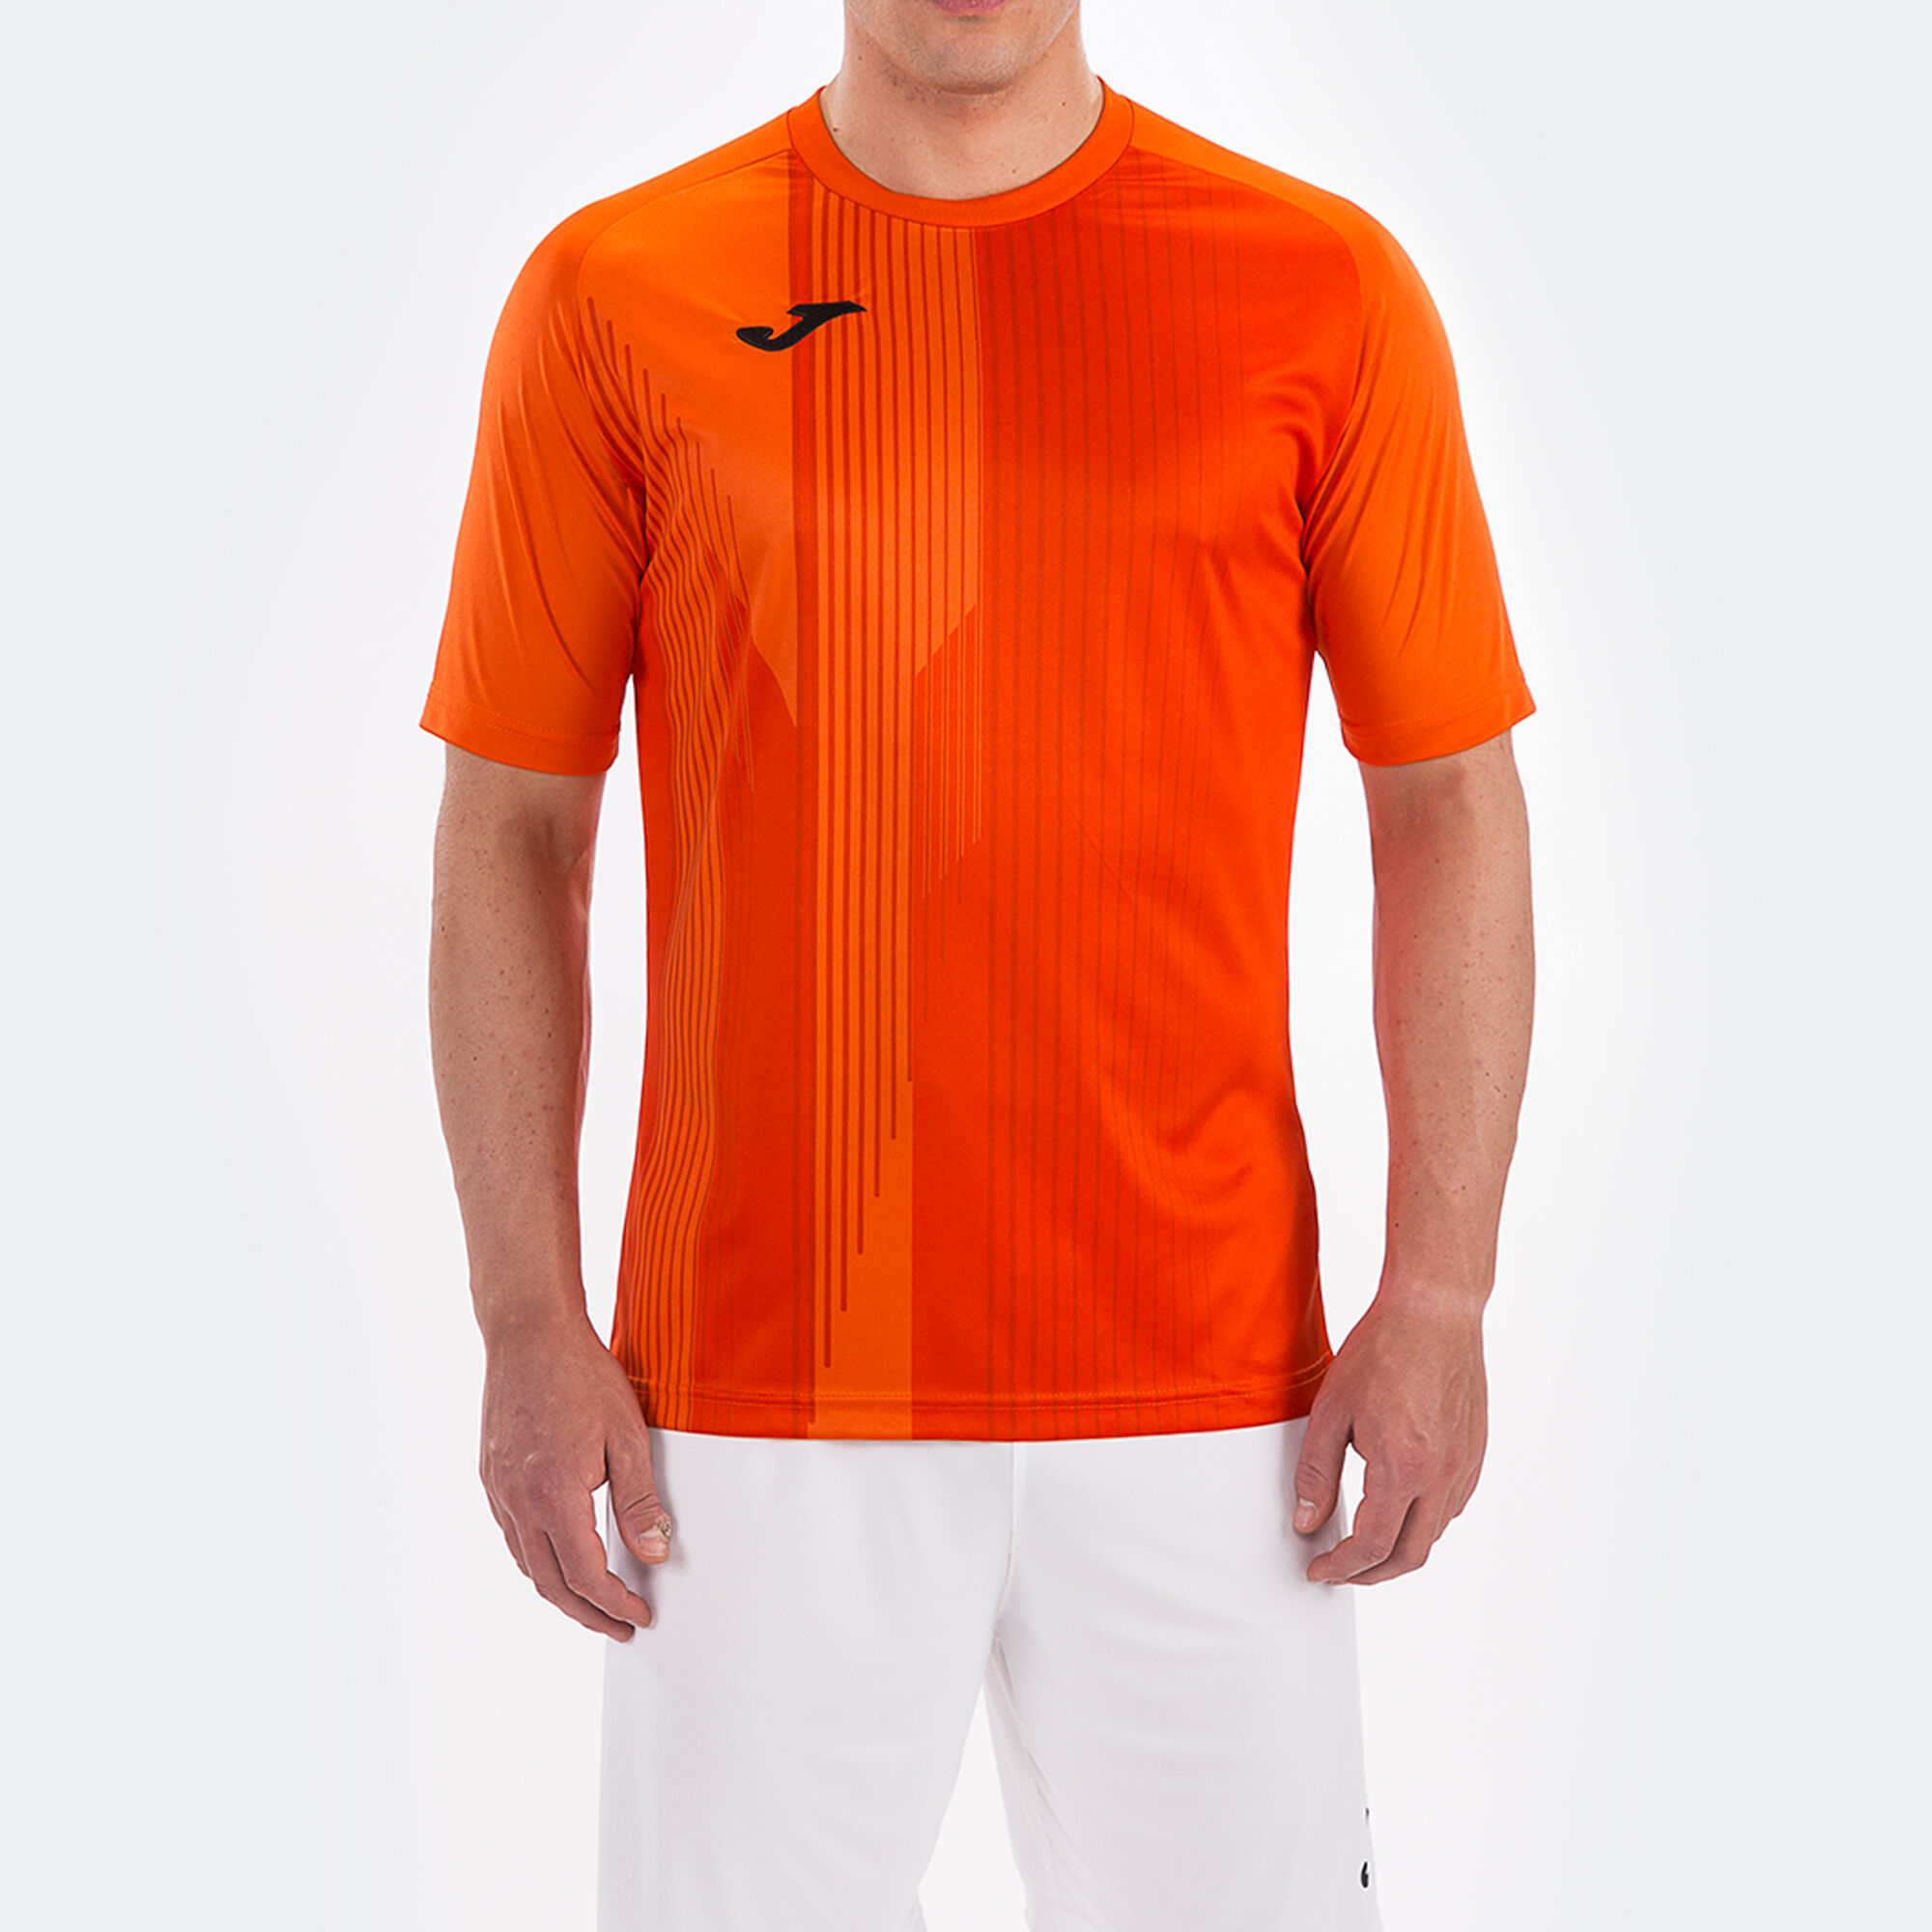 Camiseta manga corta hombre Tiger naranja